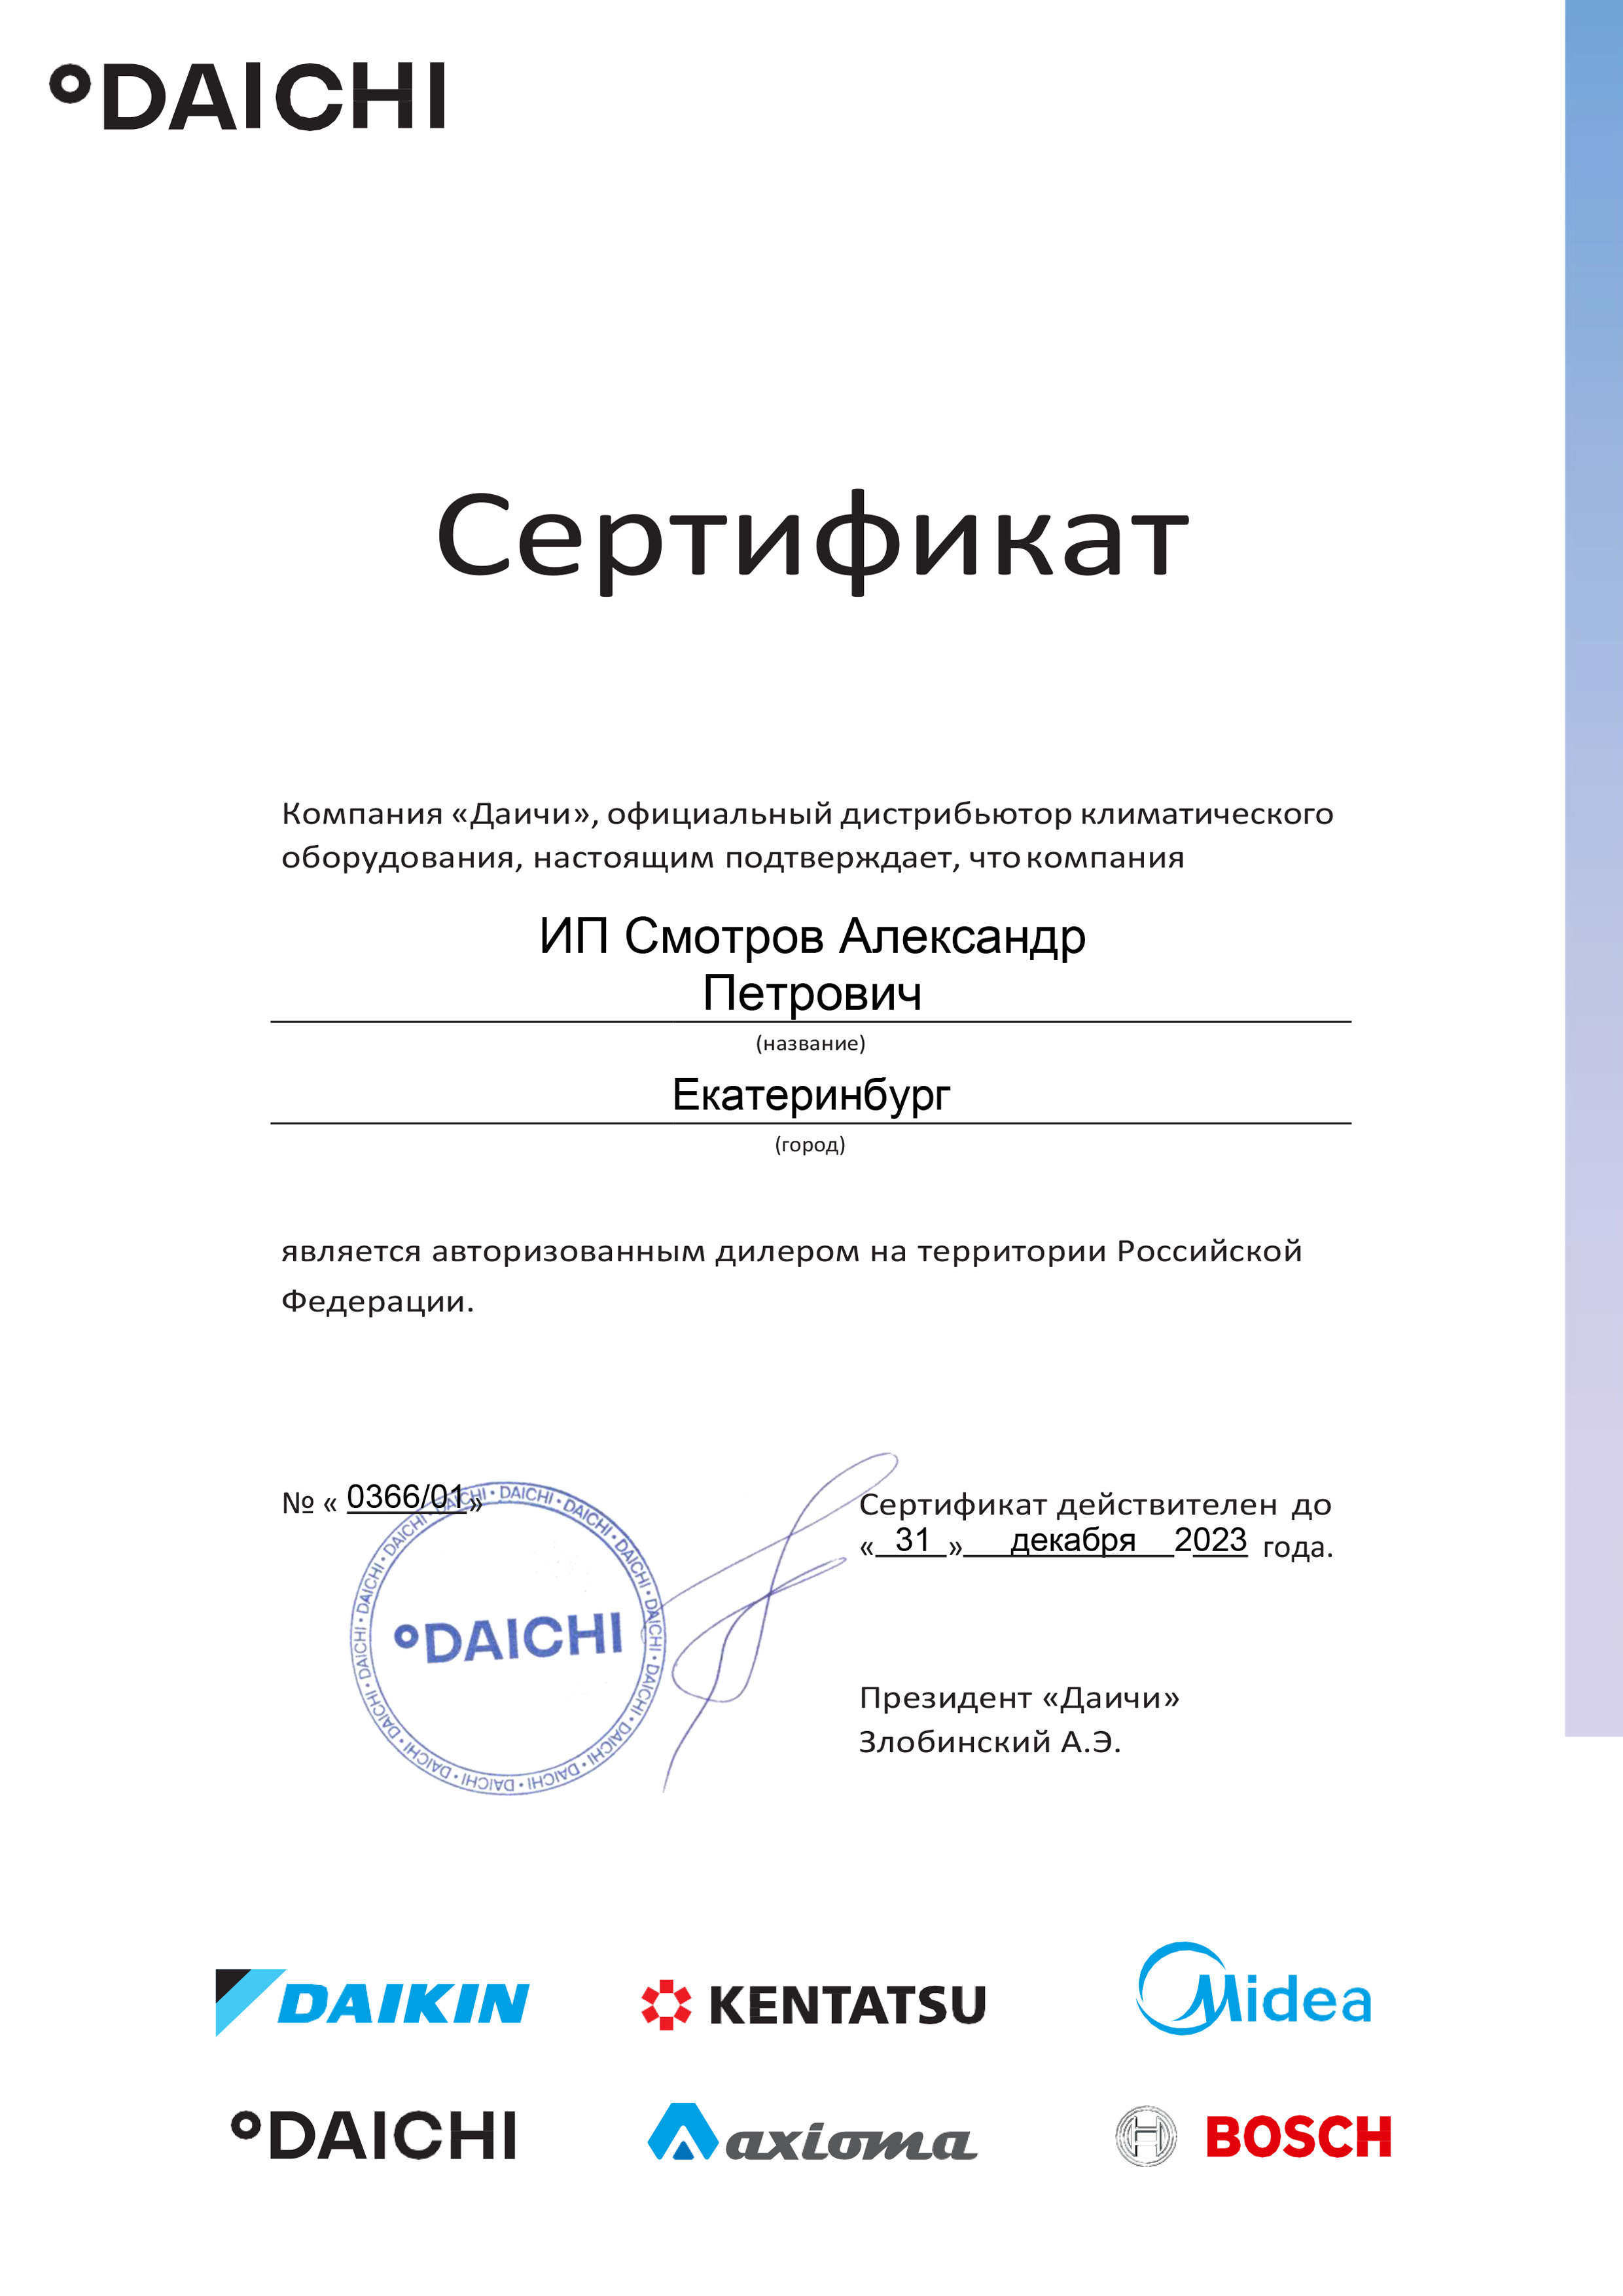 daichi-ip Kondicioner Daichi AIR35AVQ1/AIR35FV1 kypit v Ekaterinbyrge v internet-magazine KlimatMarket96.ry Сертификат дилера